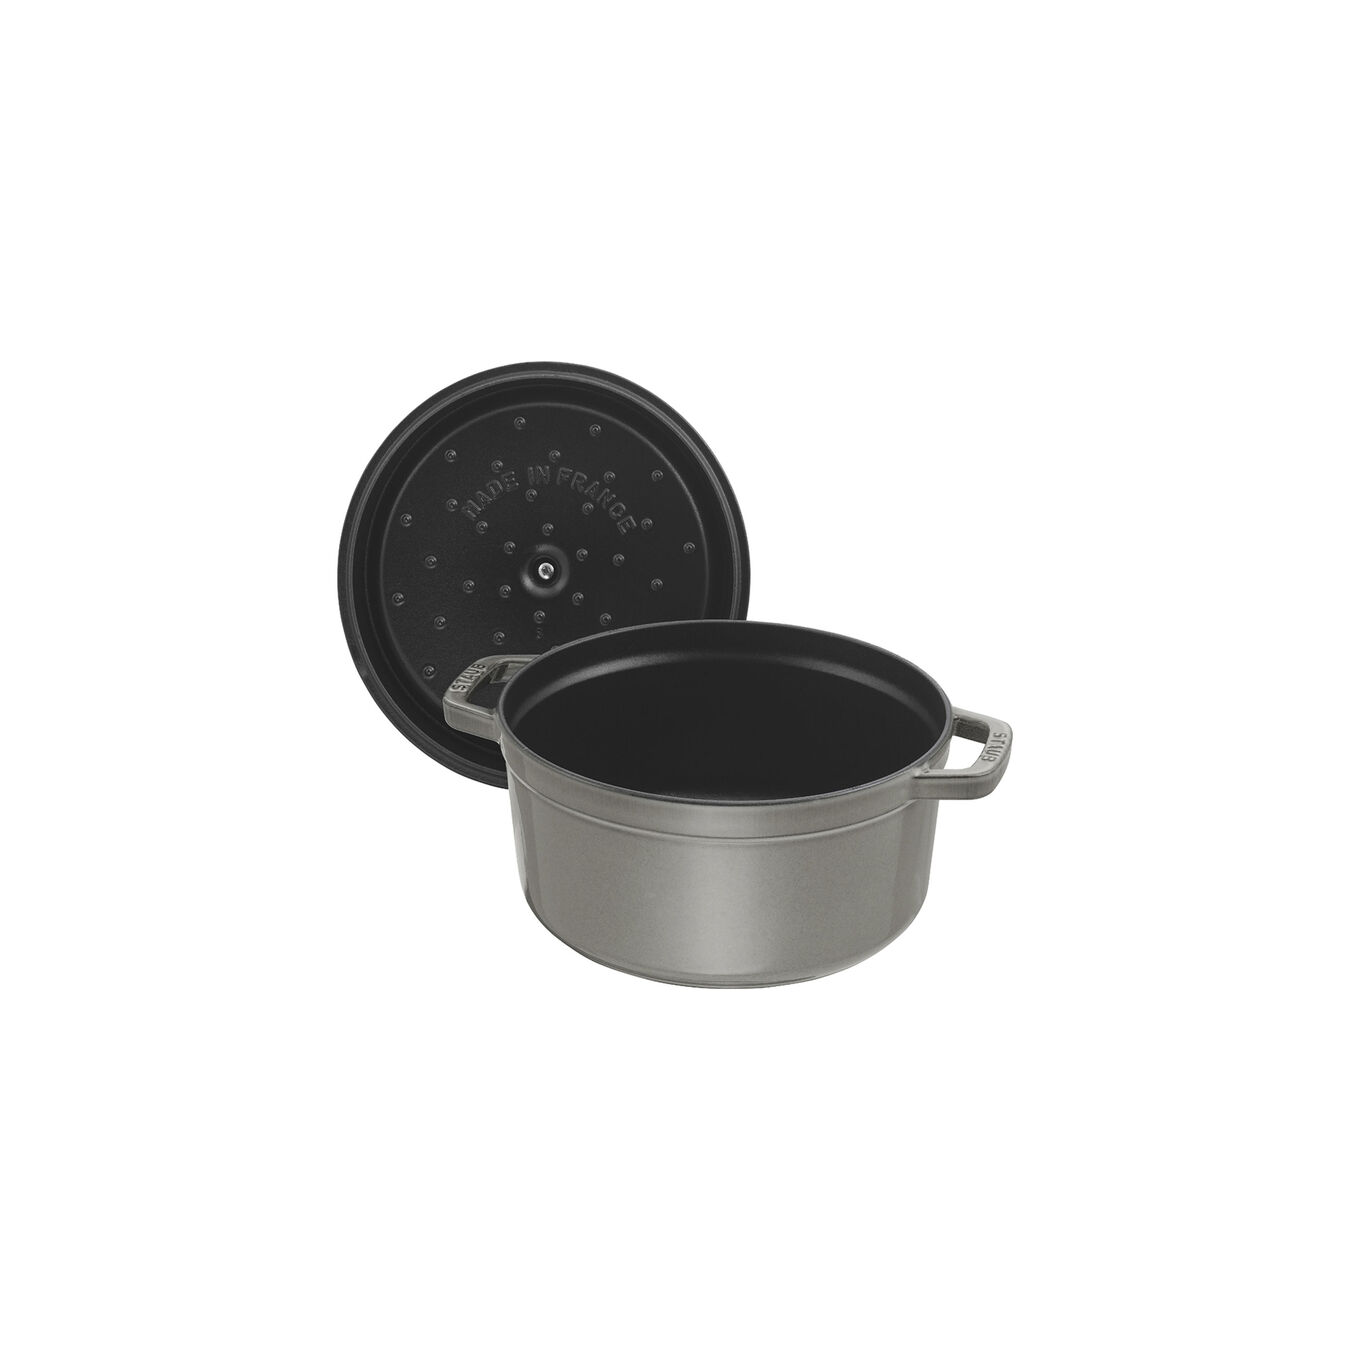 20 cm round Cast iron Cocotte graphite-grey,,large 4